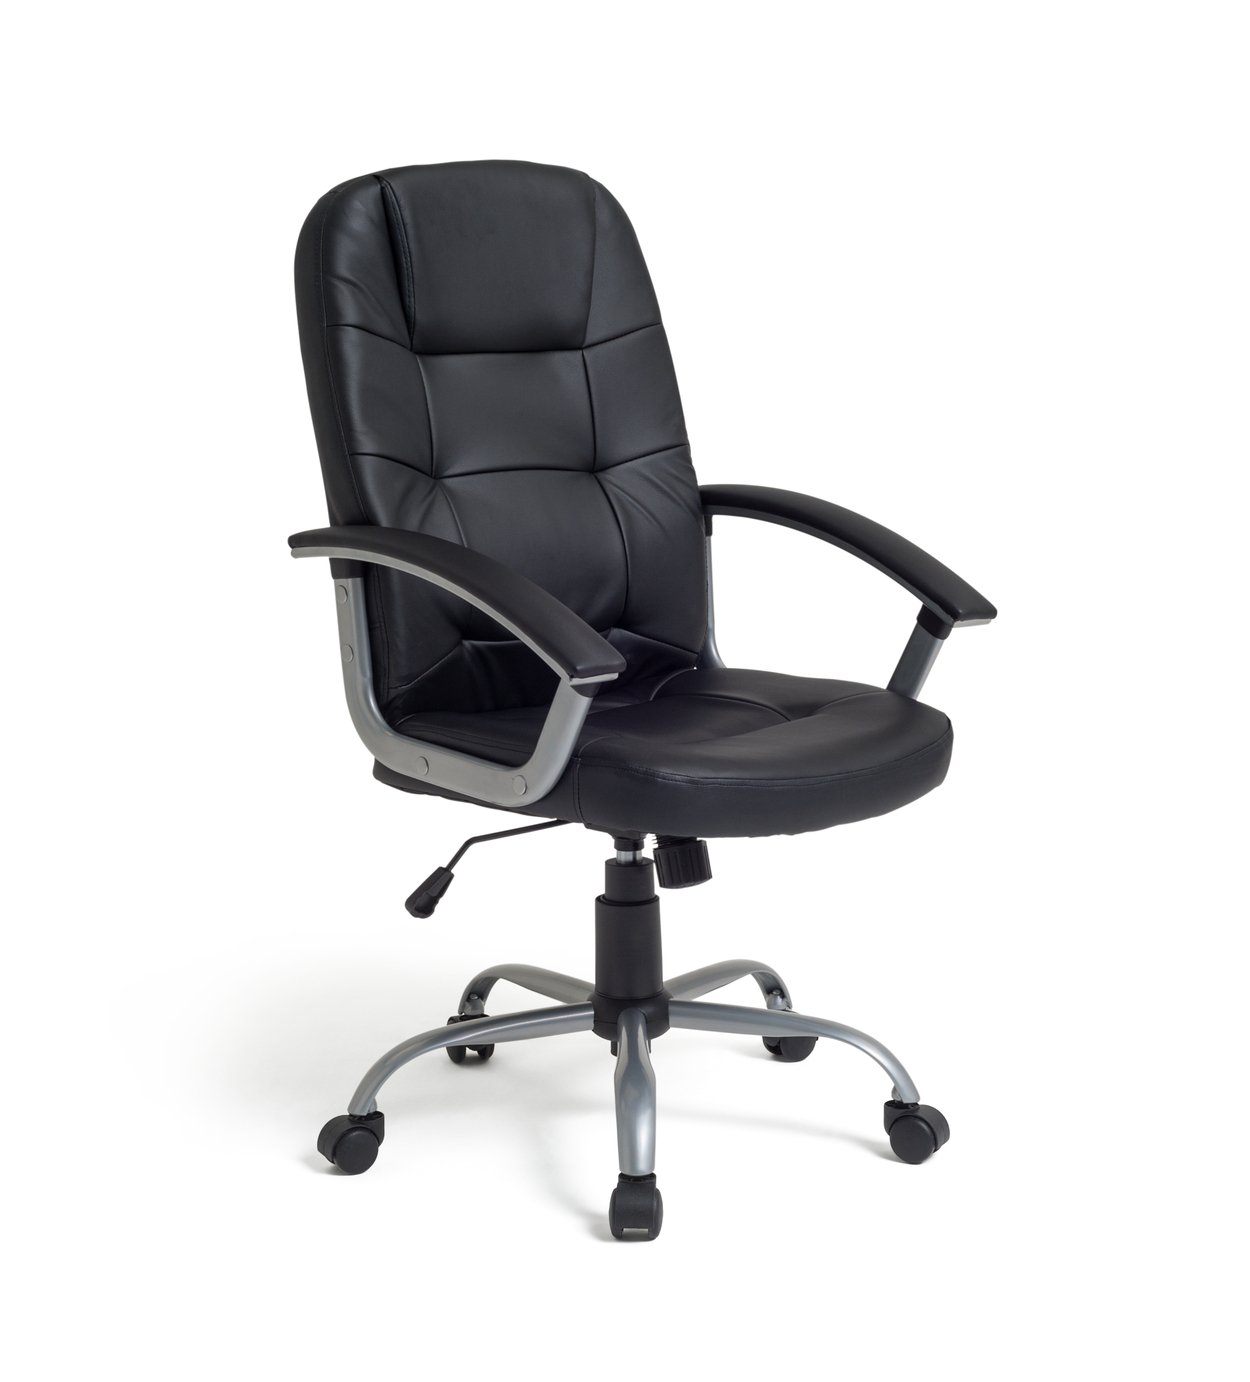 Habitat Walker Height Adjustable Office Chair - Black